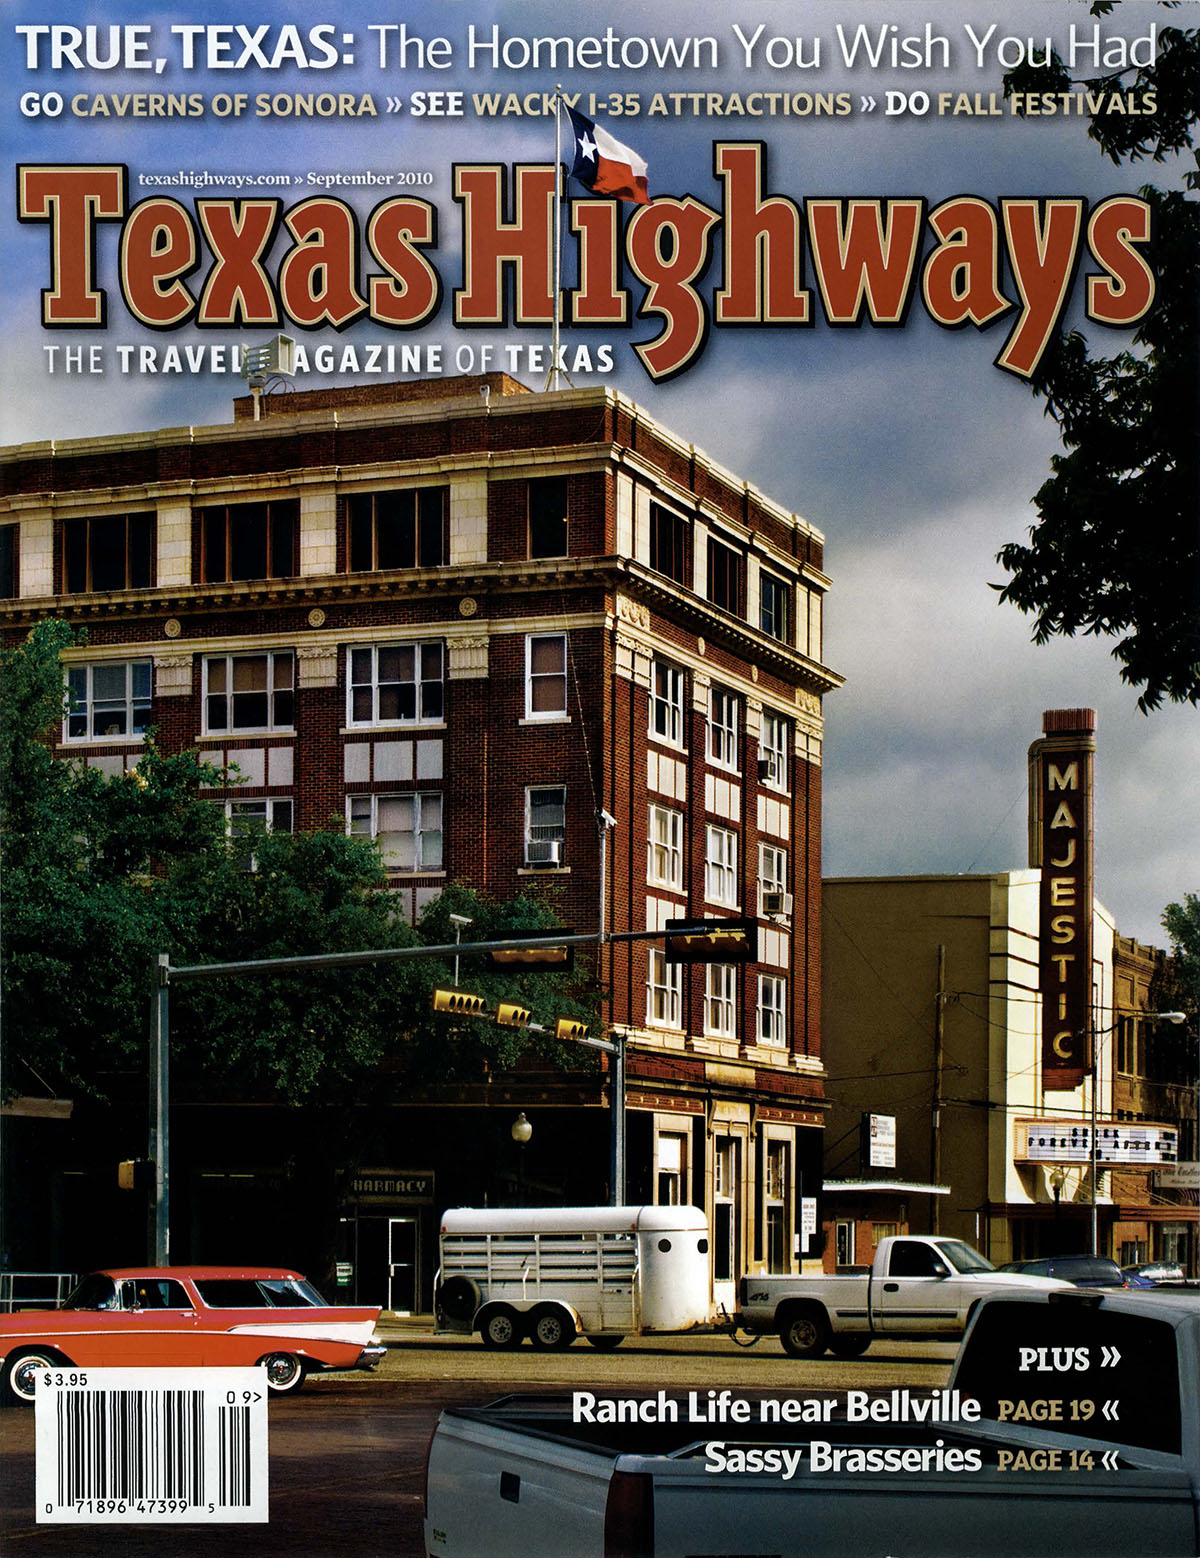 The September 2010 cover of Texas Highways Magazine